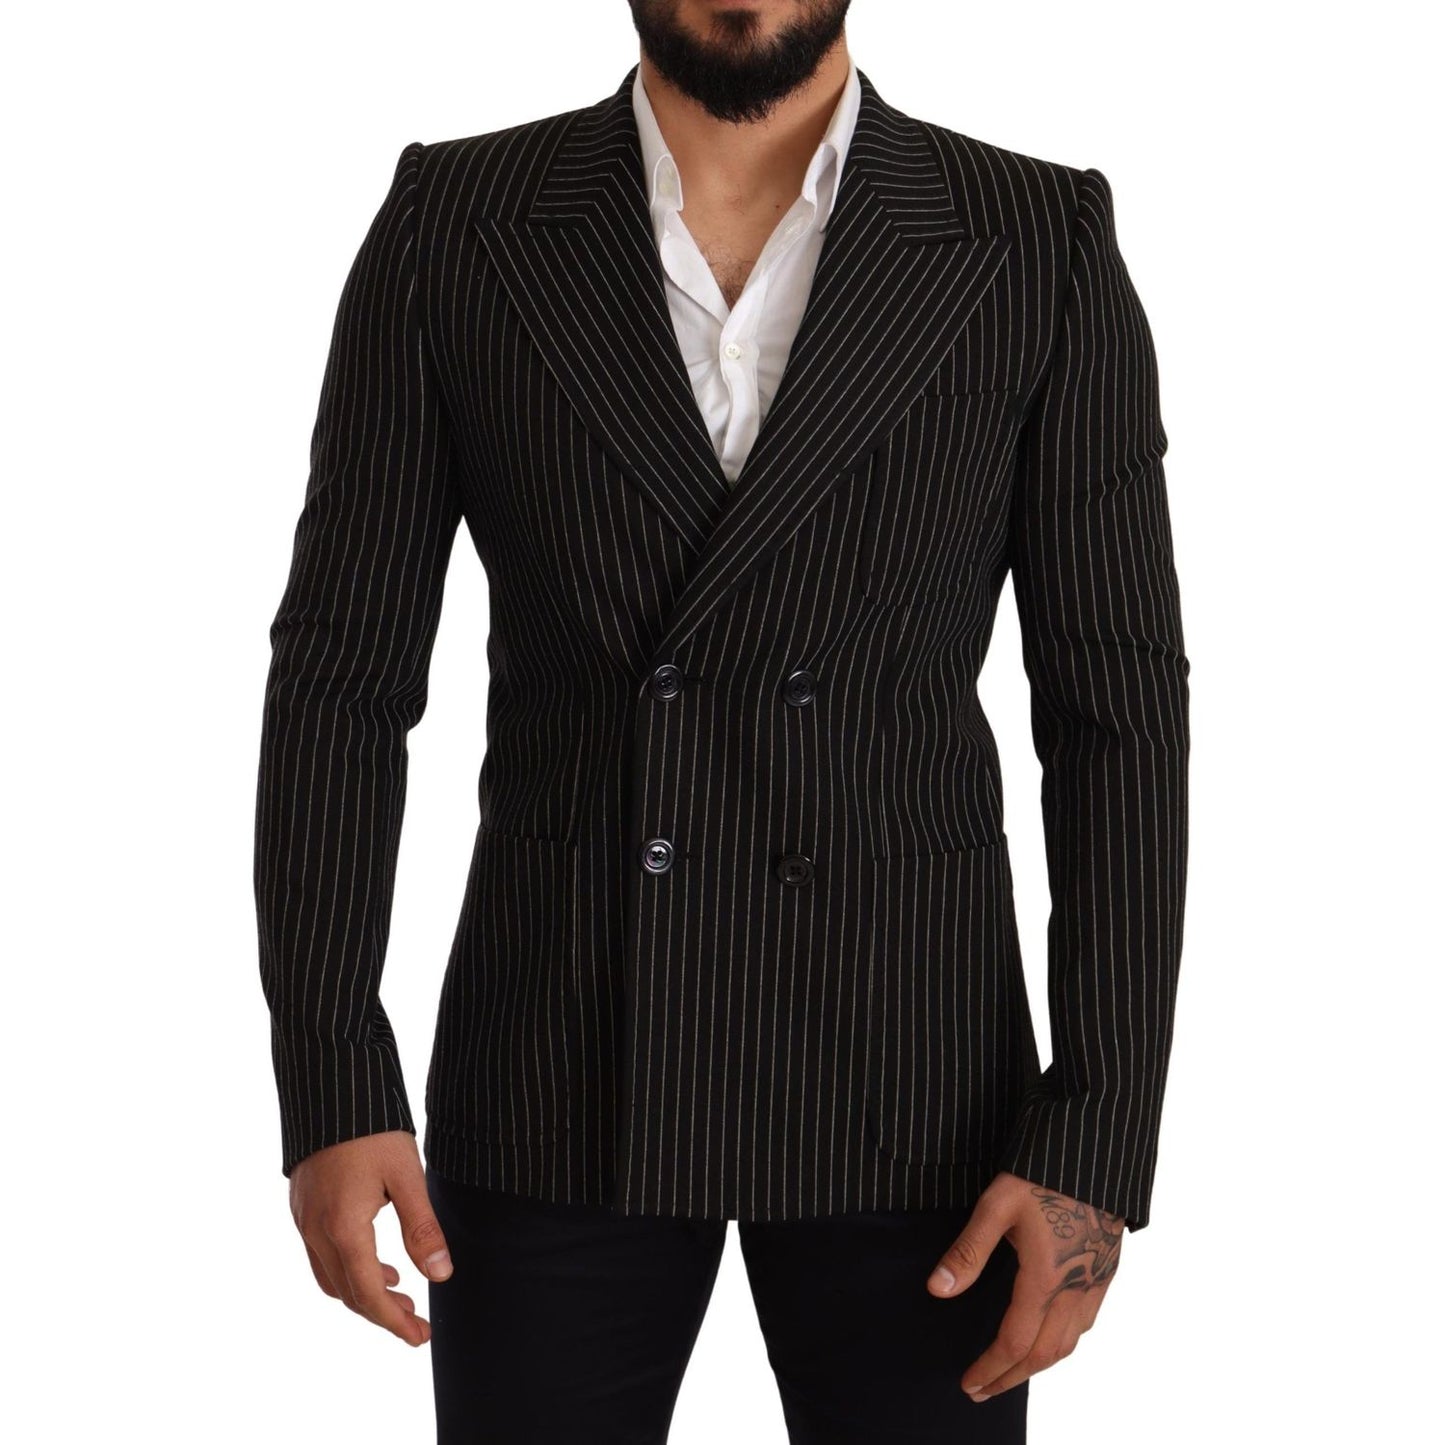 Dolce & Gabbana Elegant Striped Wool Blazer with Silk Lining black-white-striped-slim-fit-coat-blazer